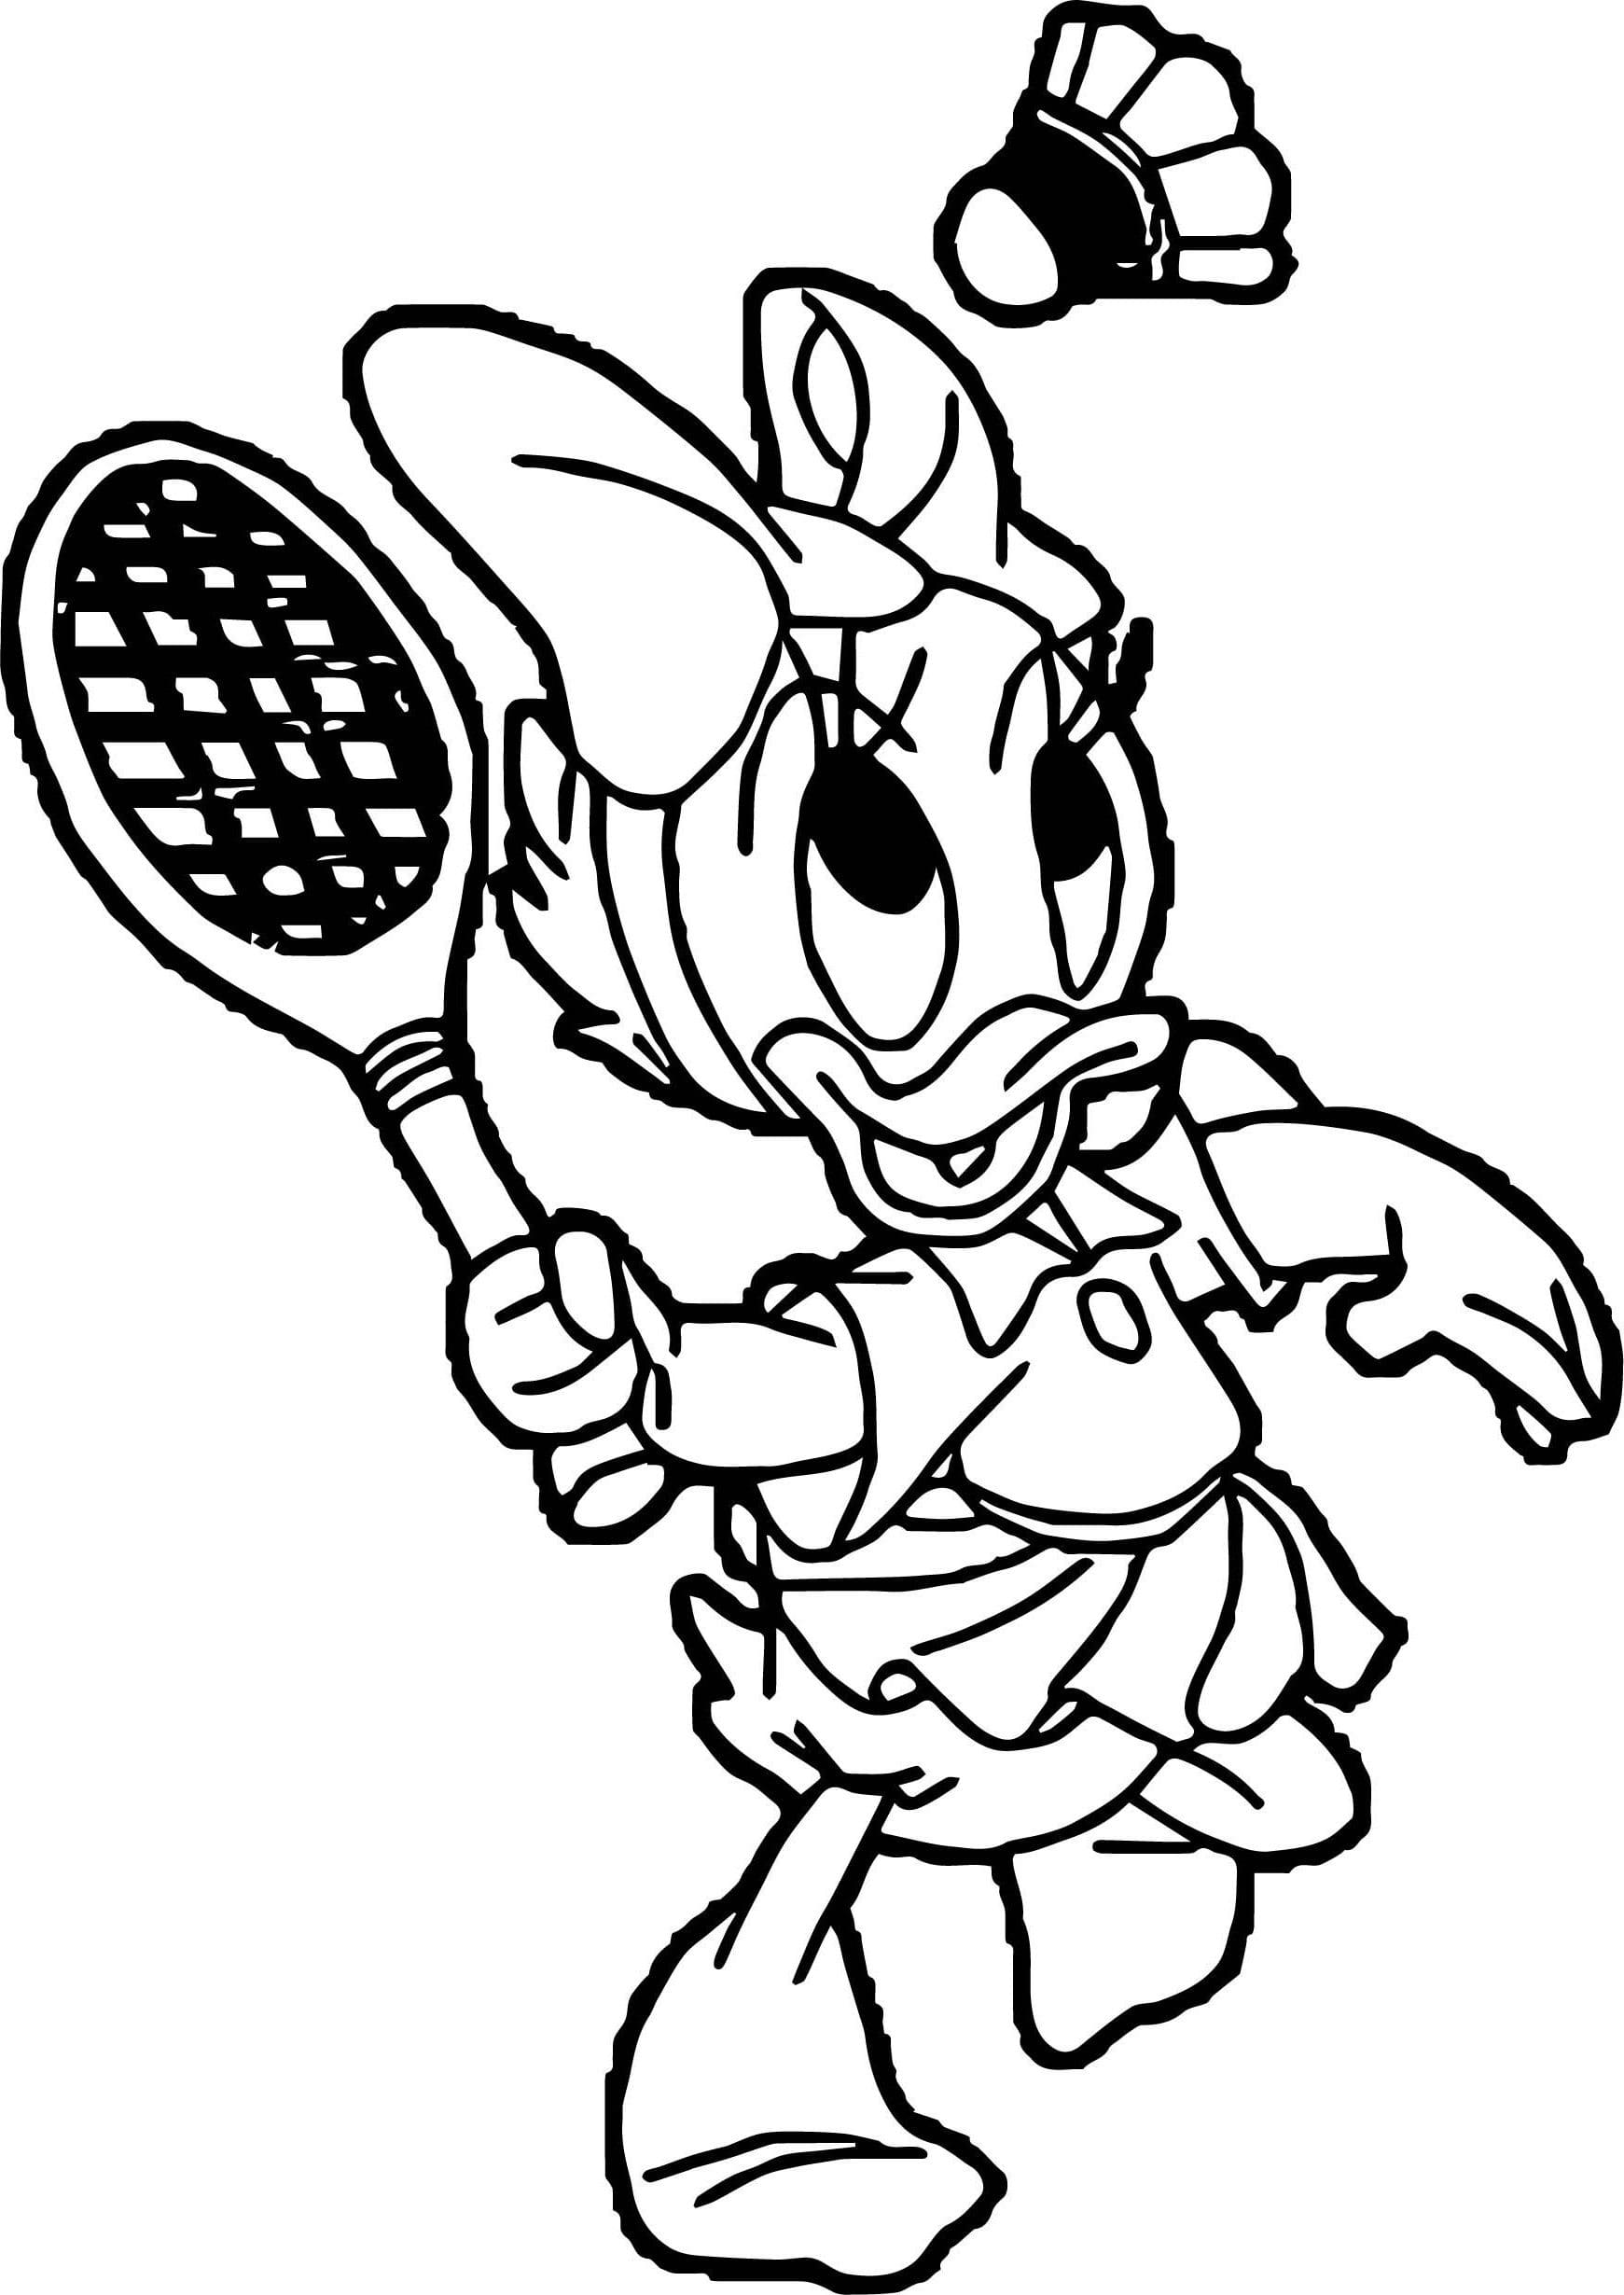 Daisy Playing Badminton